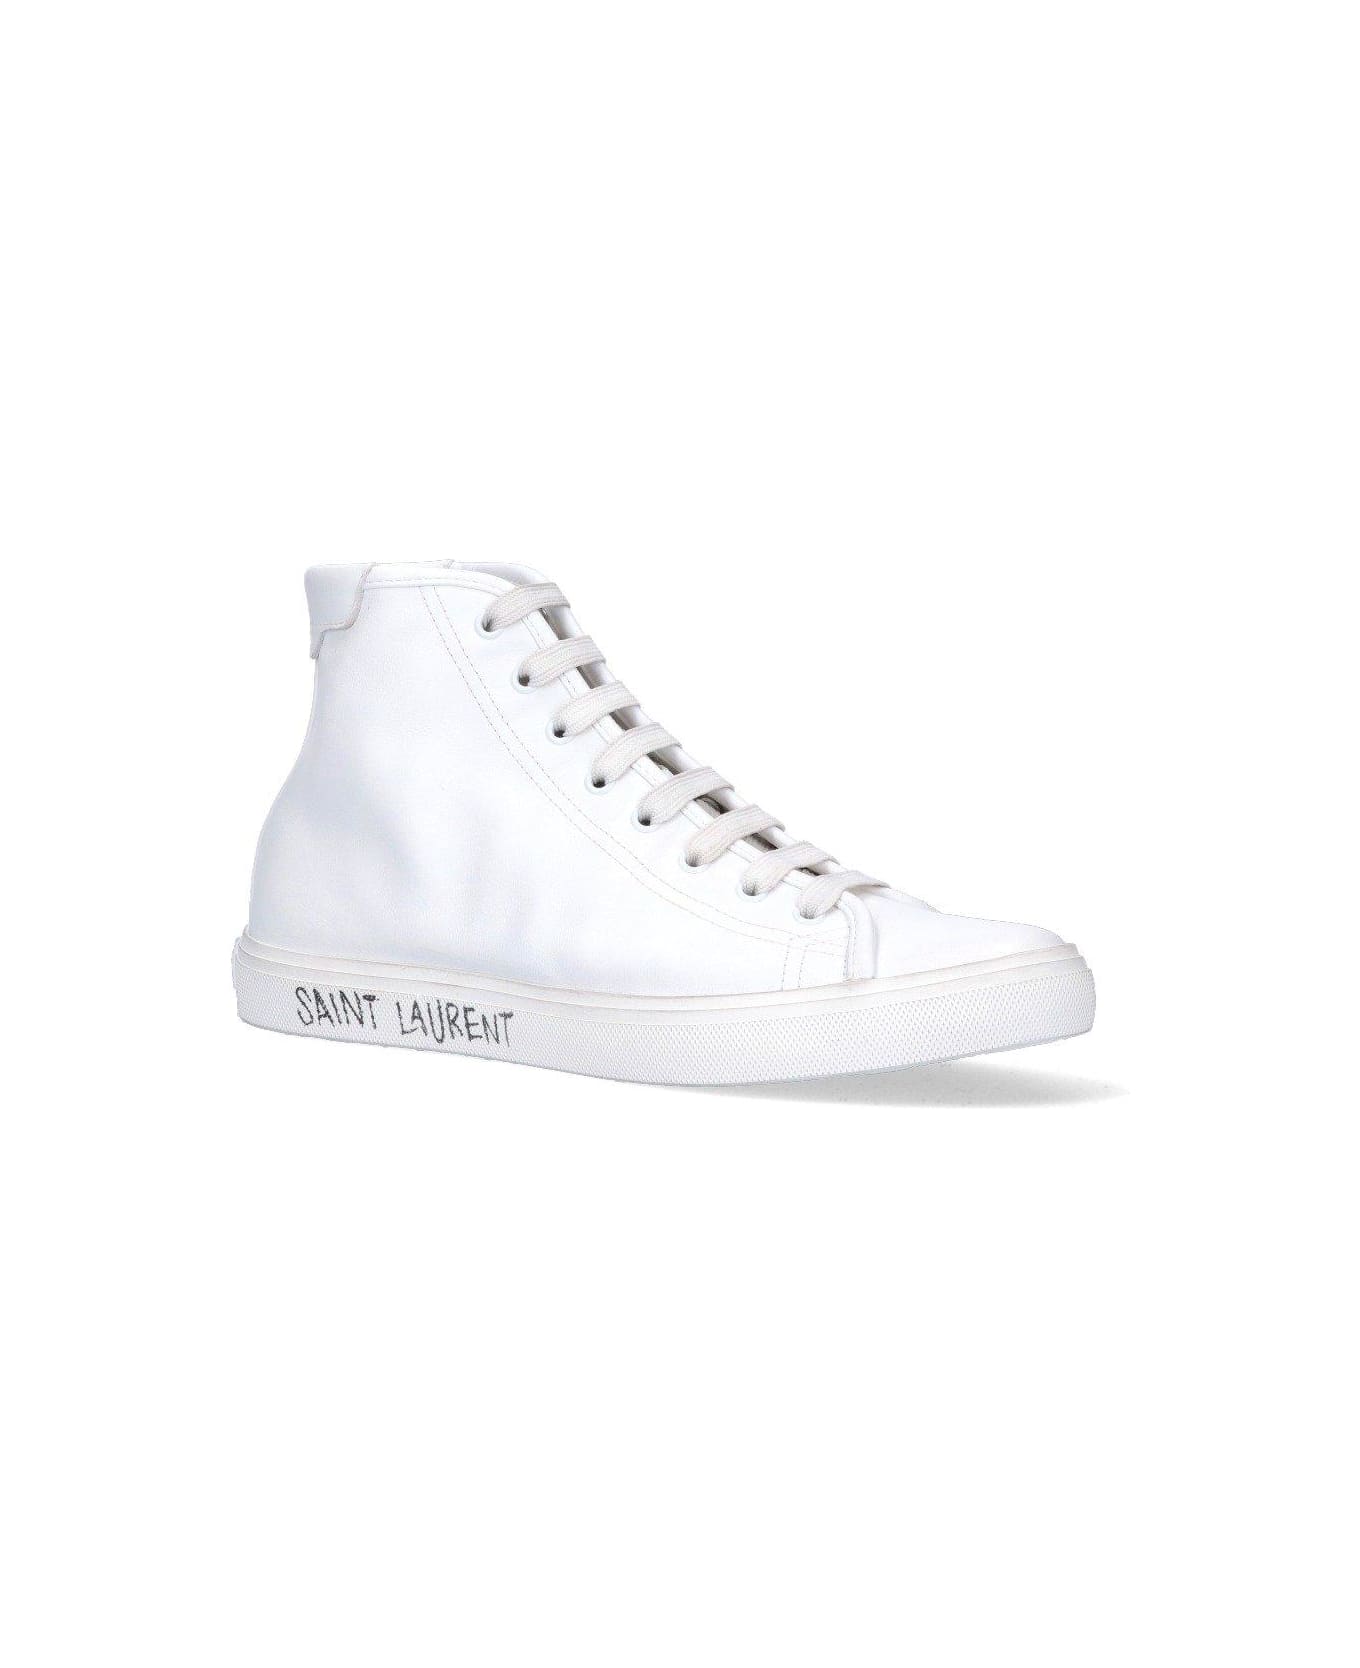 Saint Laurent Malibu Mid-top Sneakers - WHITE スニーカー